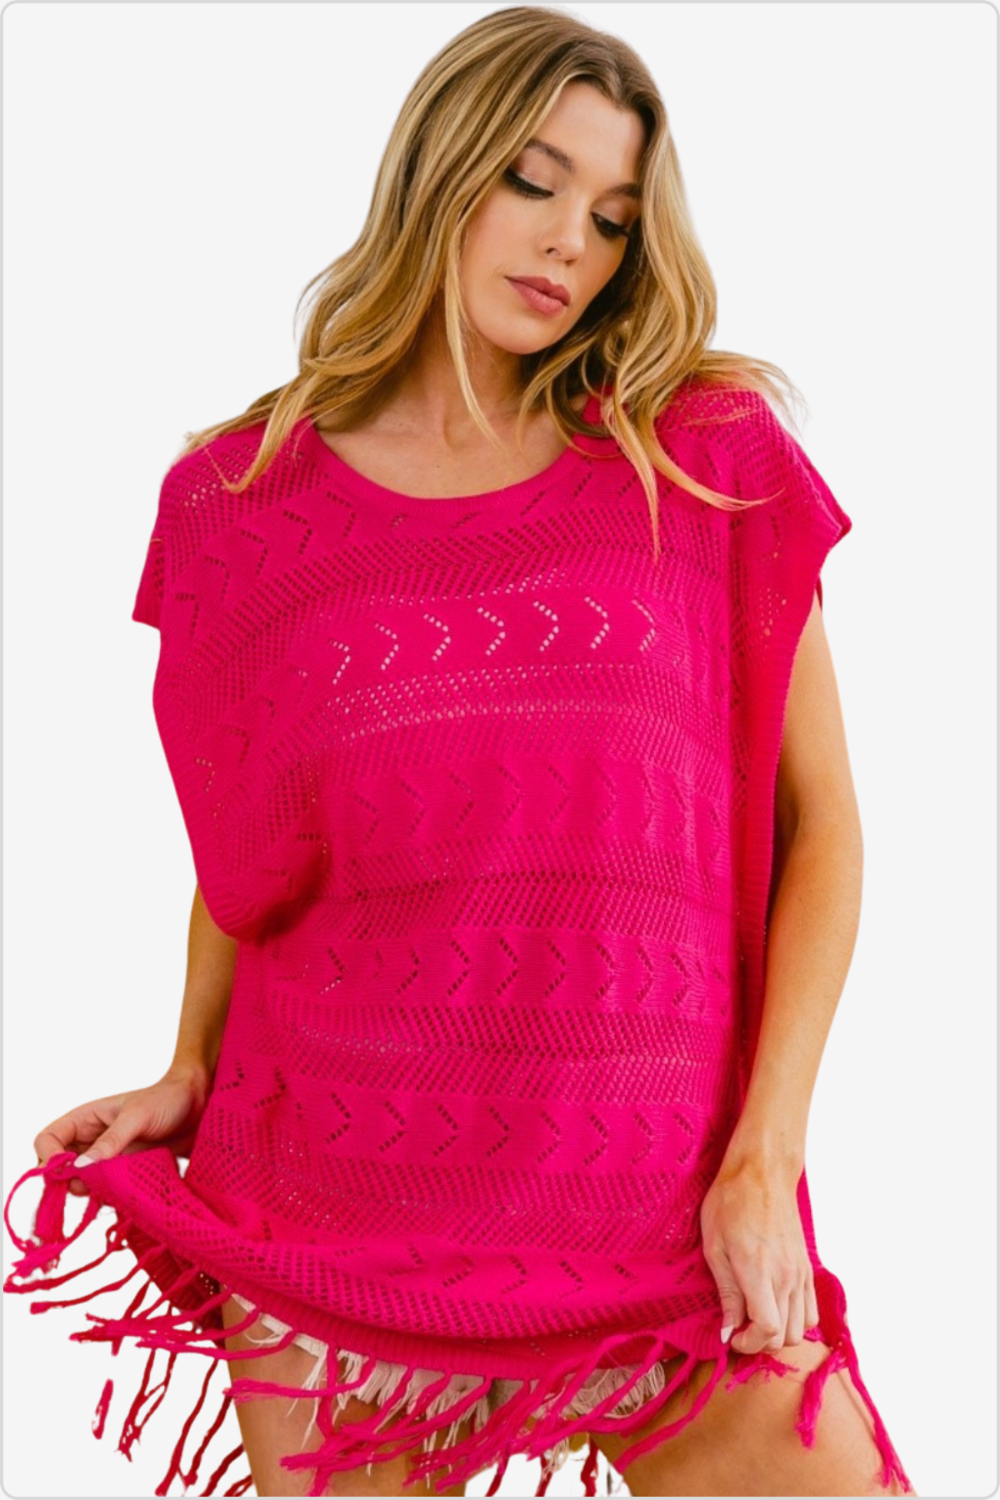 Woman modeling a bright fuchsia fringed hem knit top.